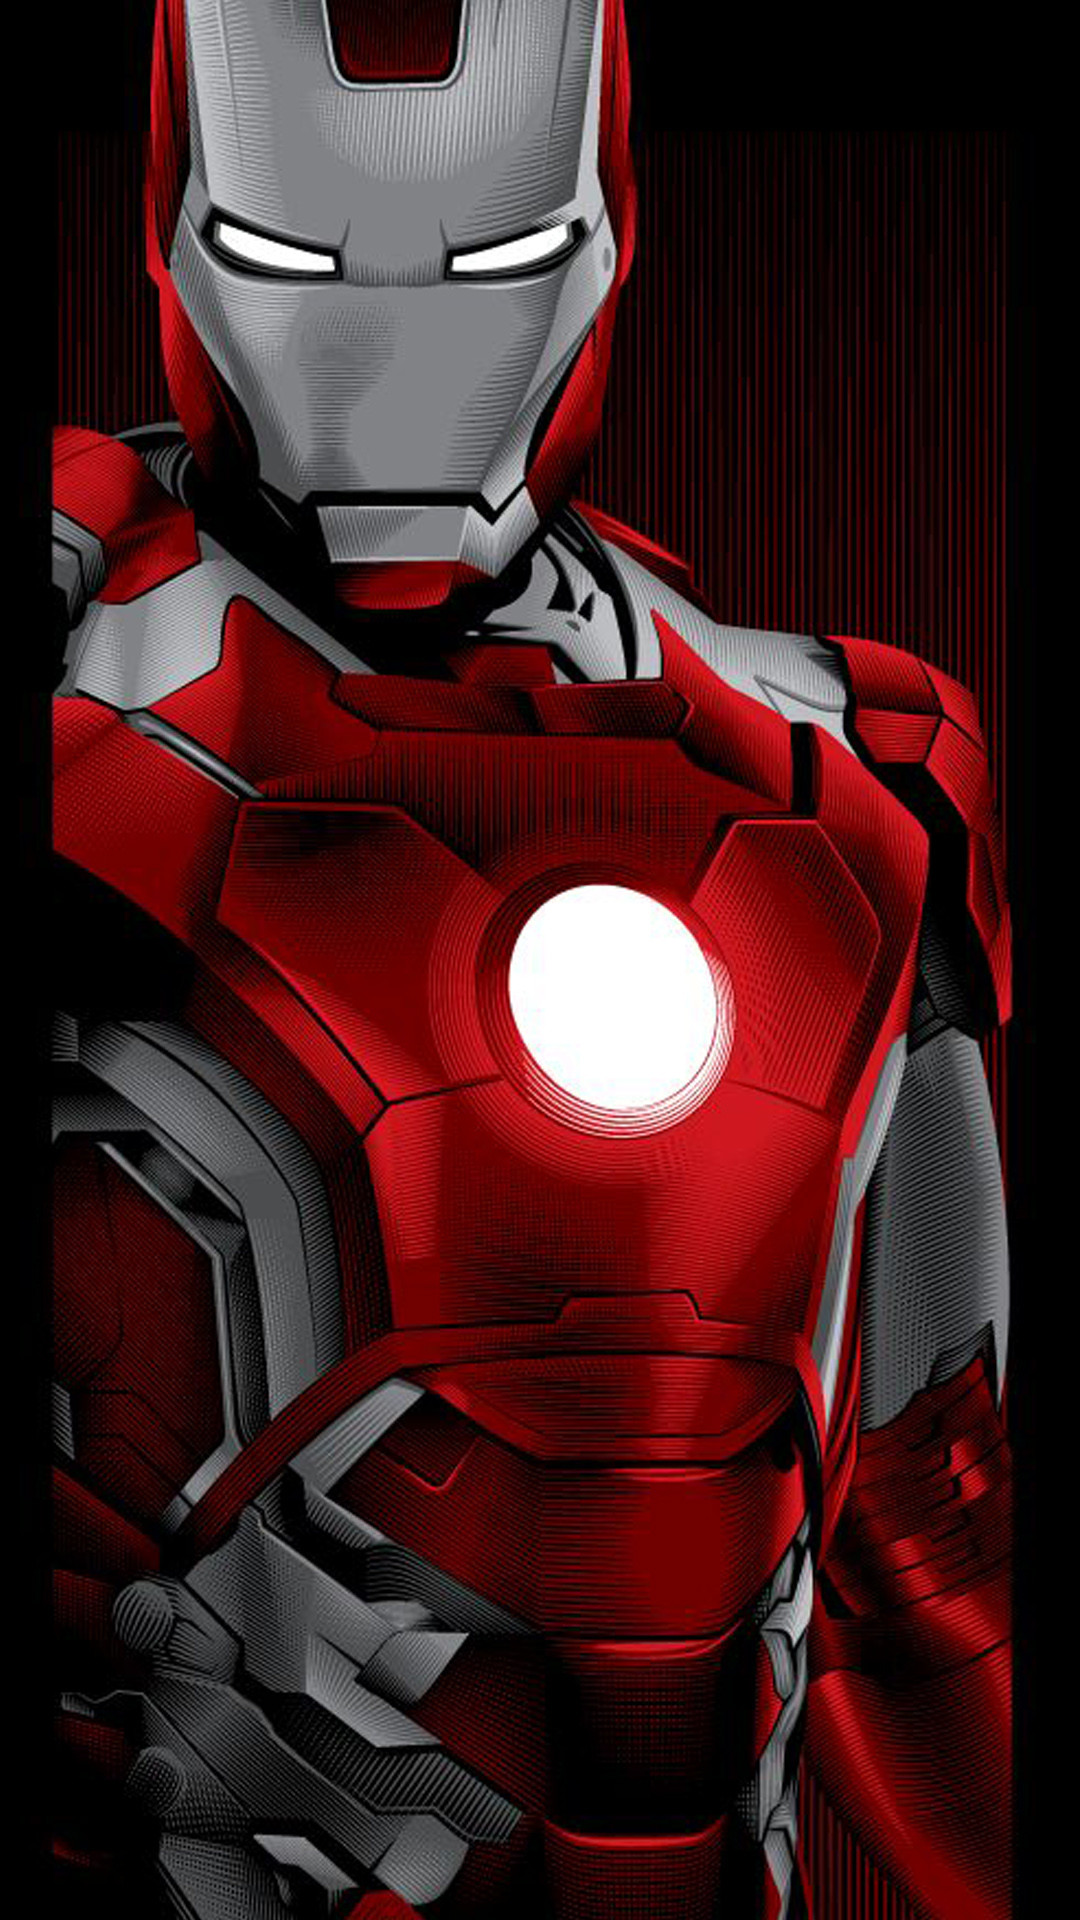 1080x1920 Iron Man cloud 9 iphone wallpaper